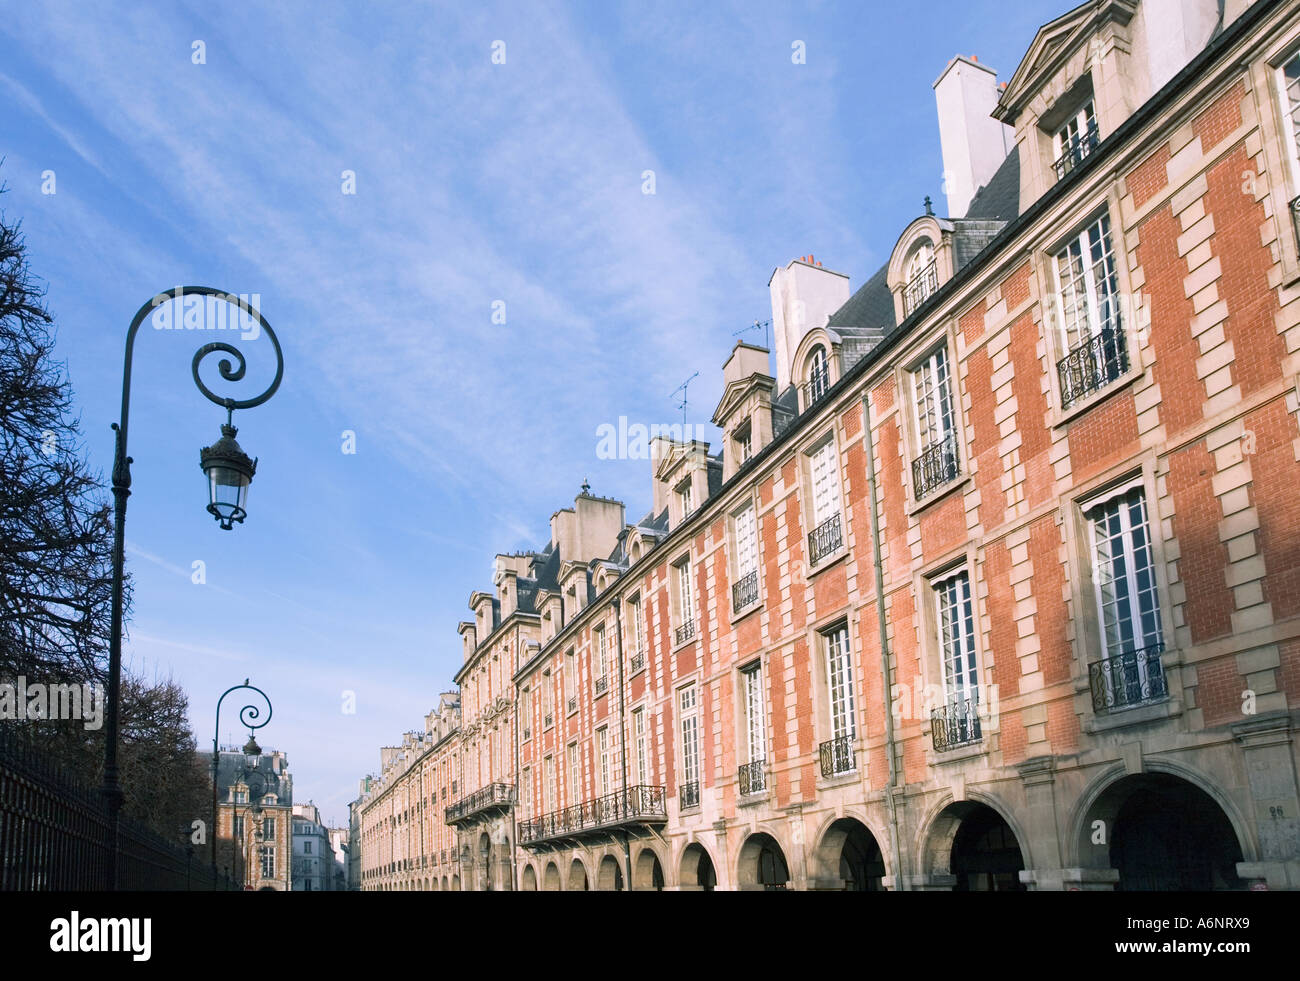 Place des vosges street with blue sky Stock Photo